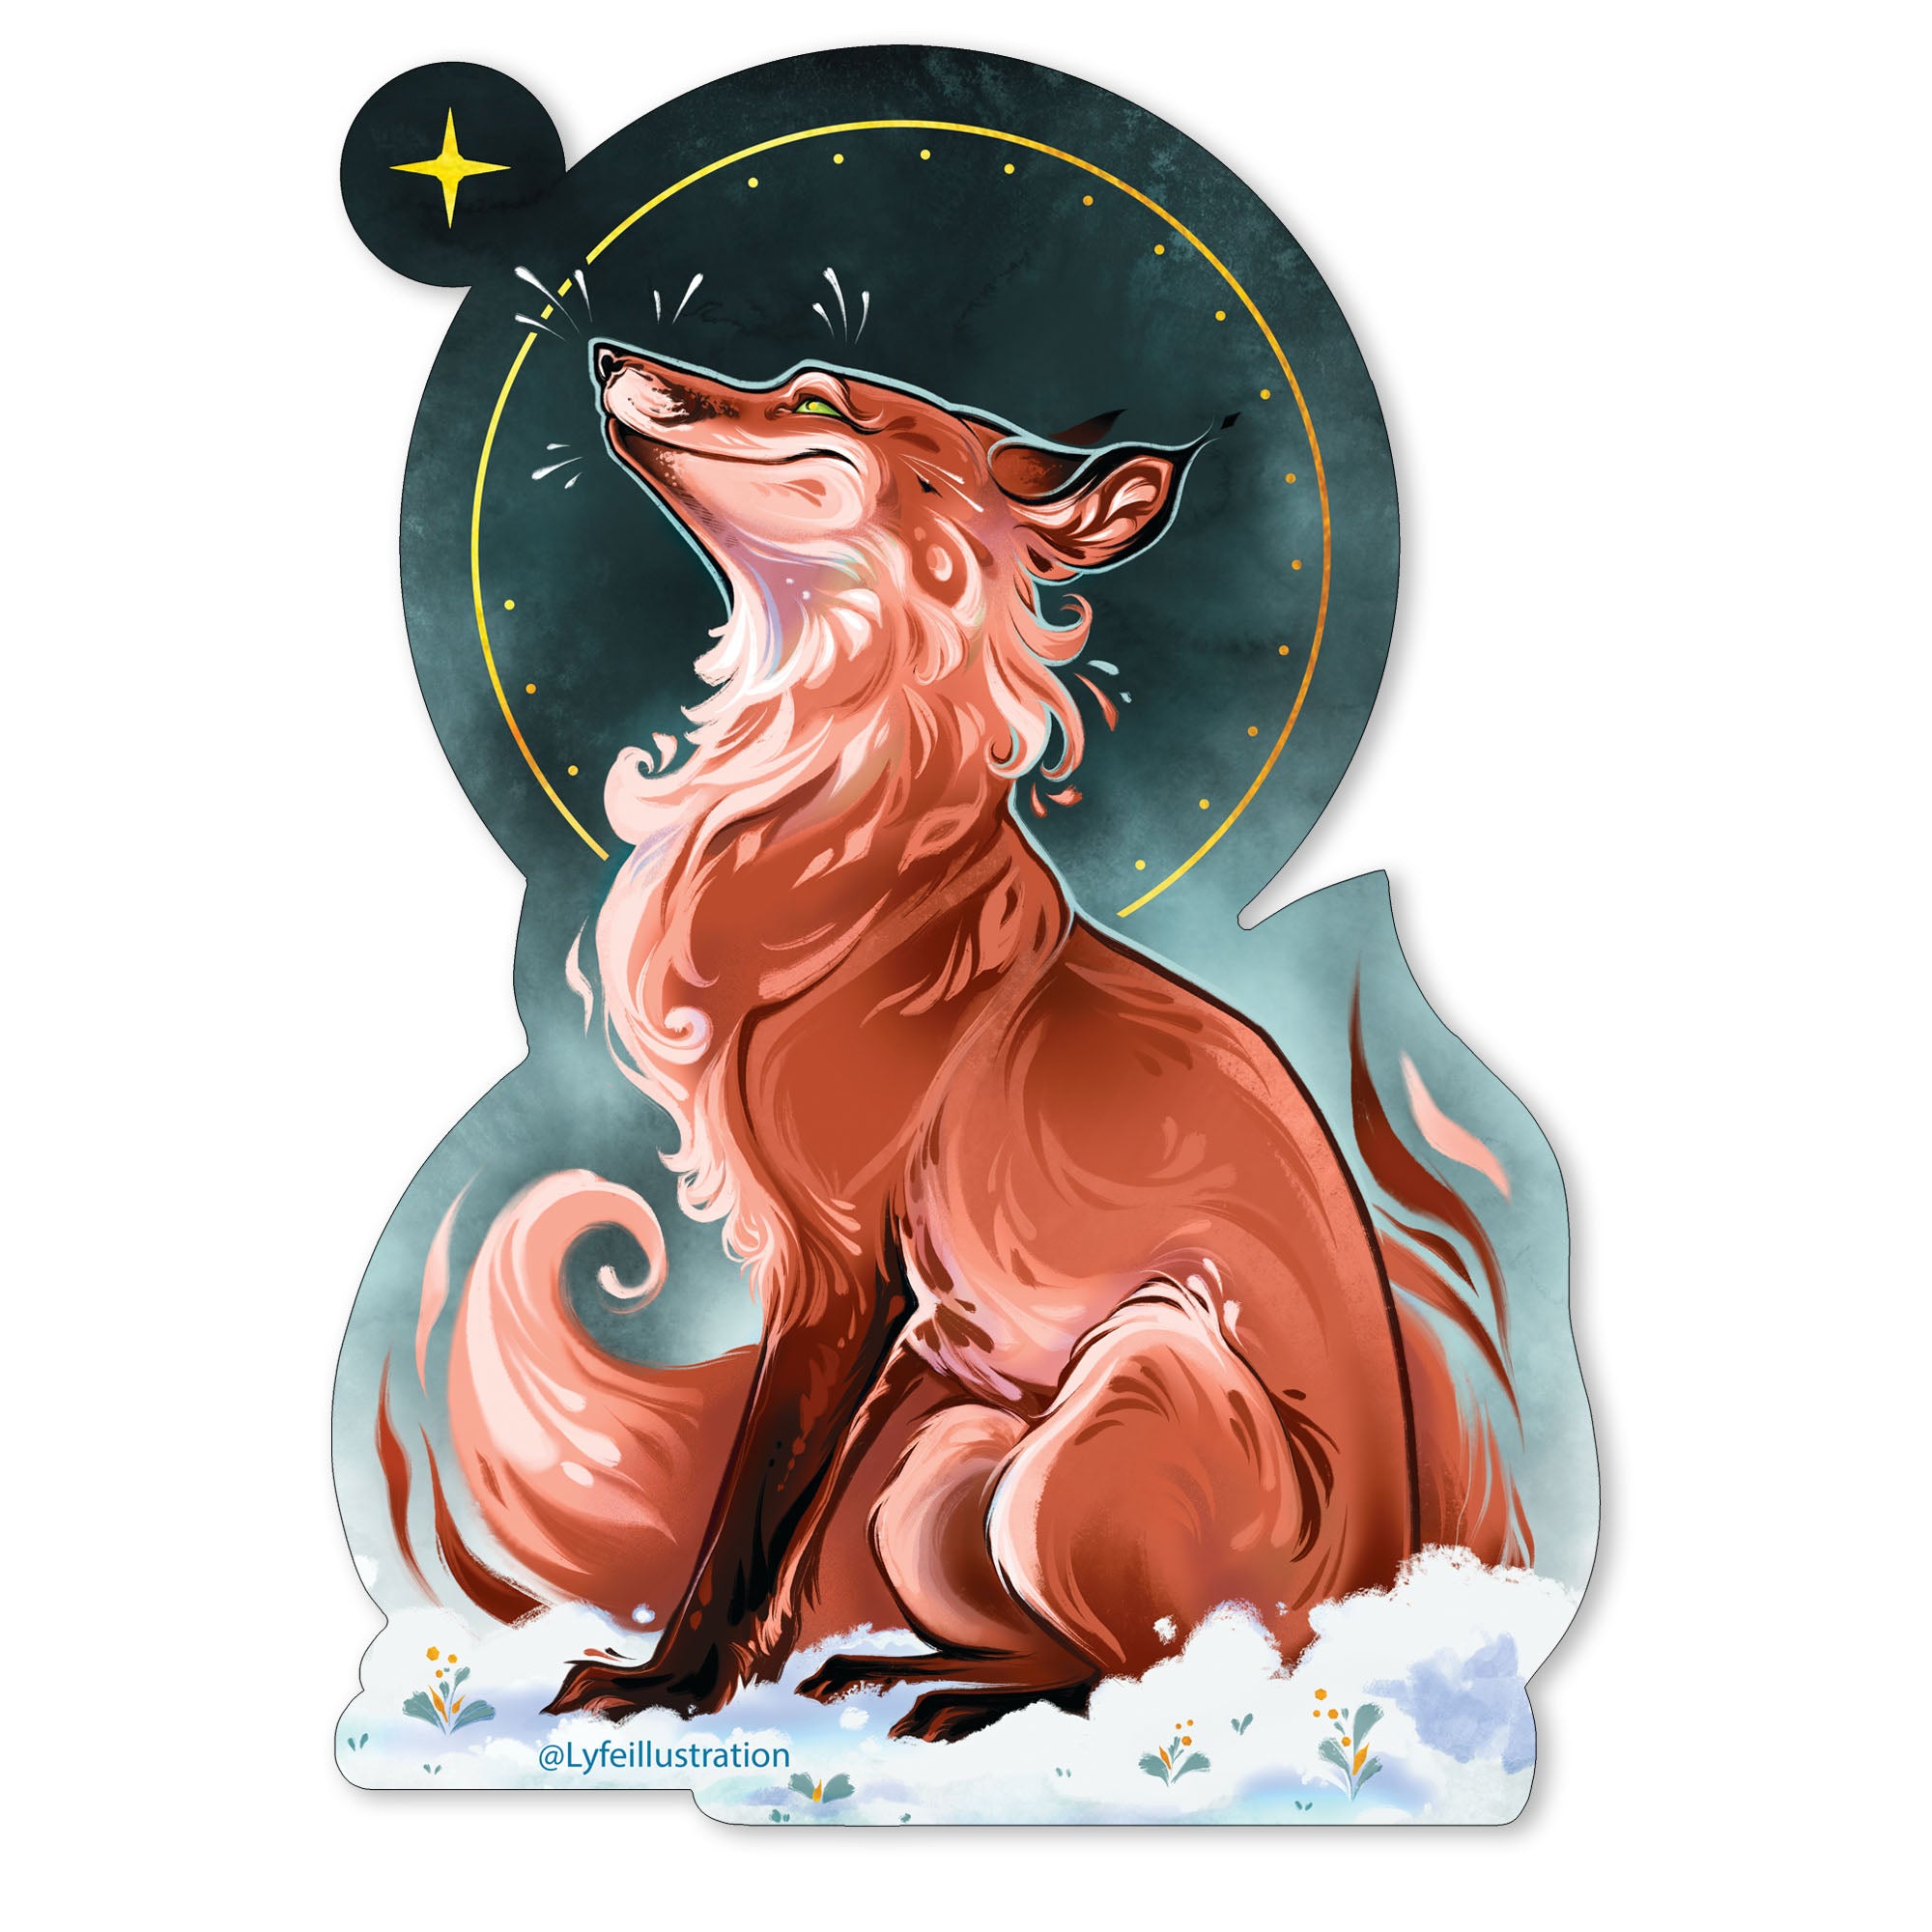 The Fox Sticker